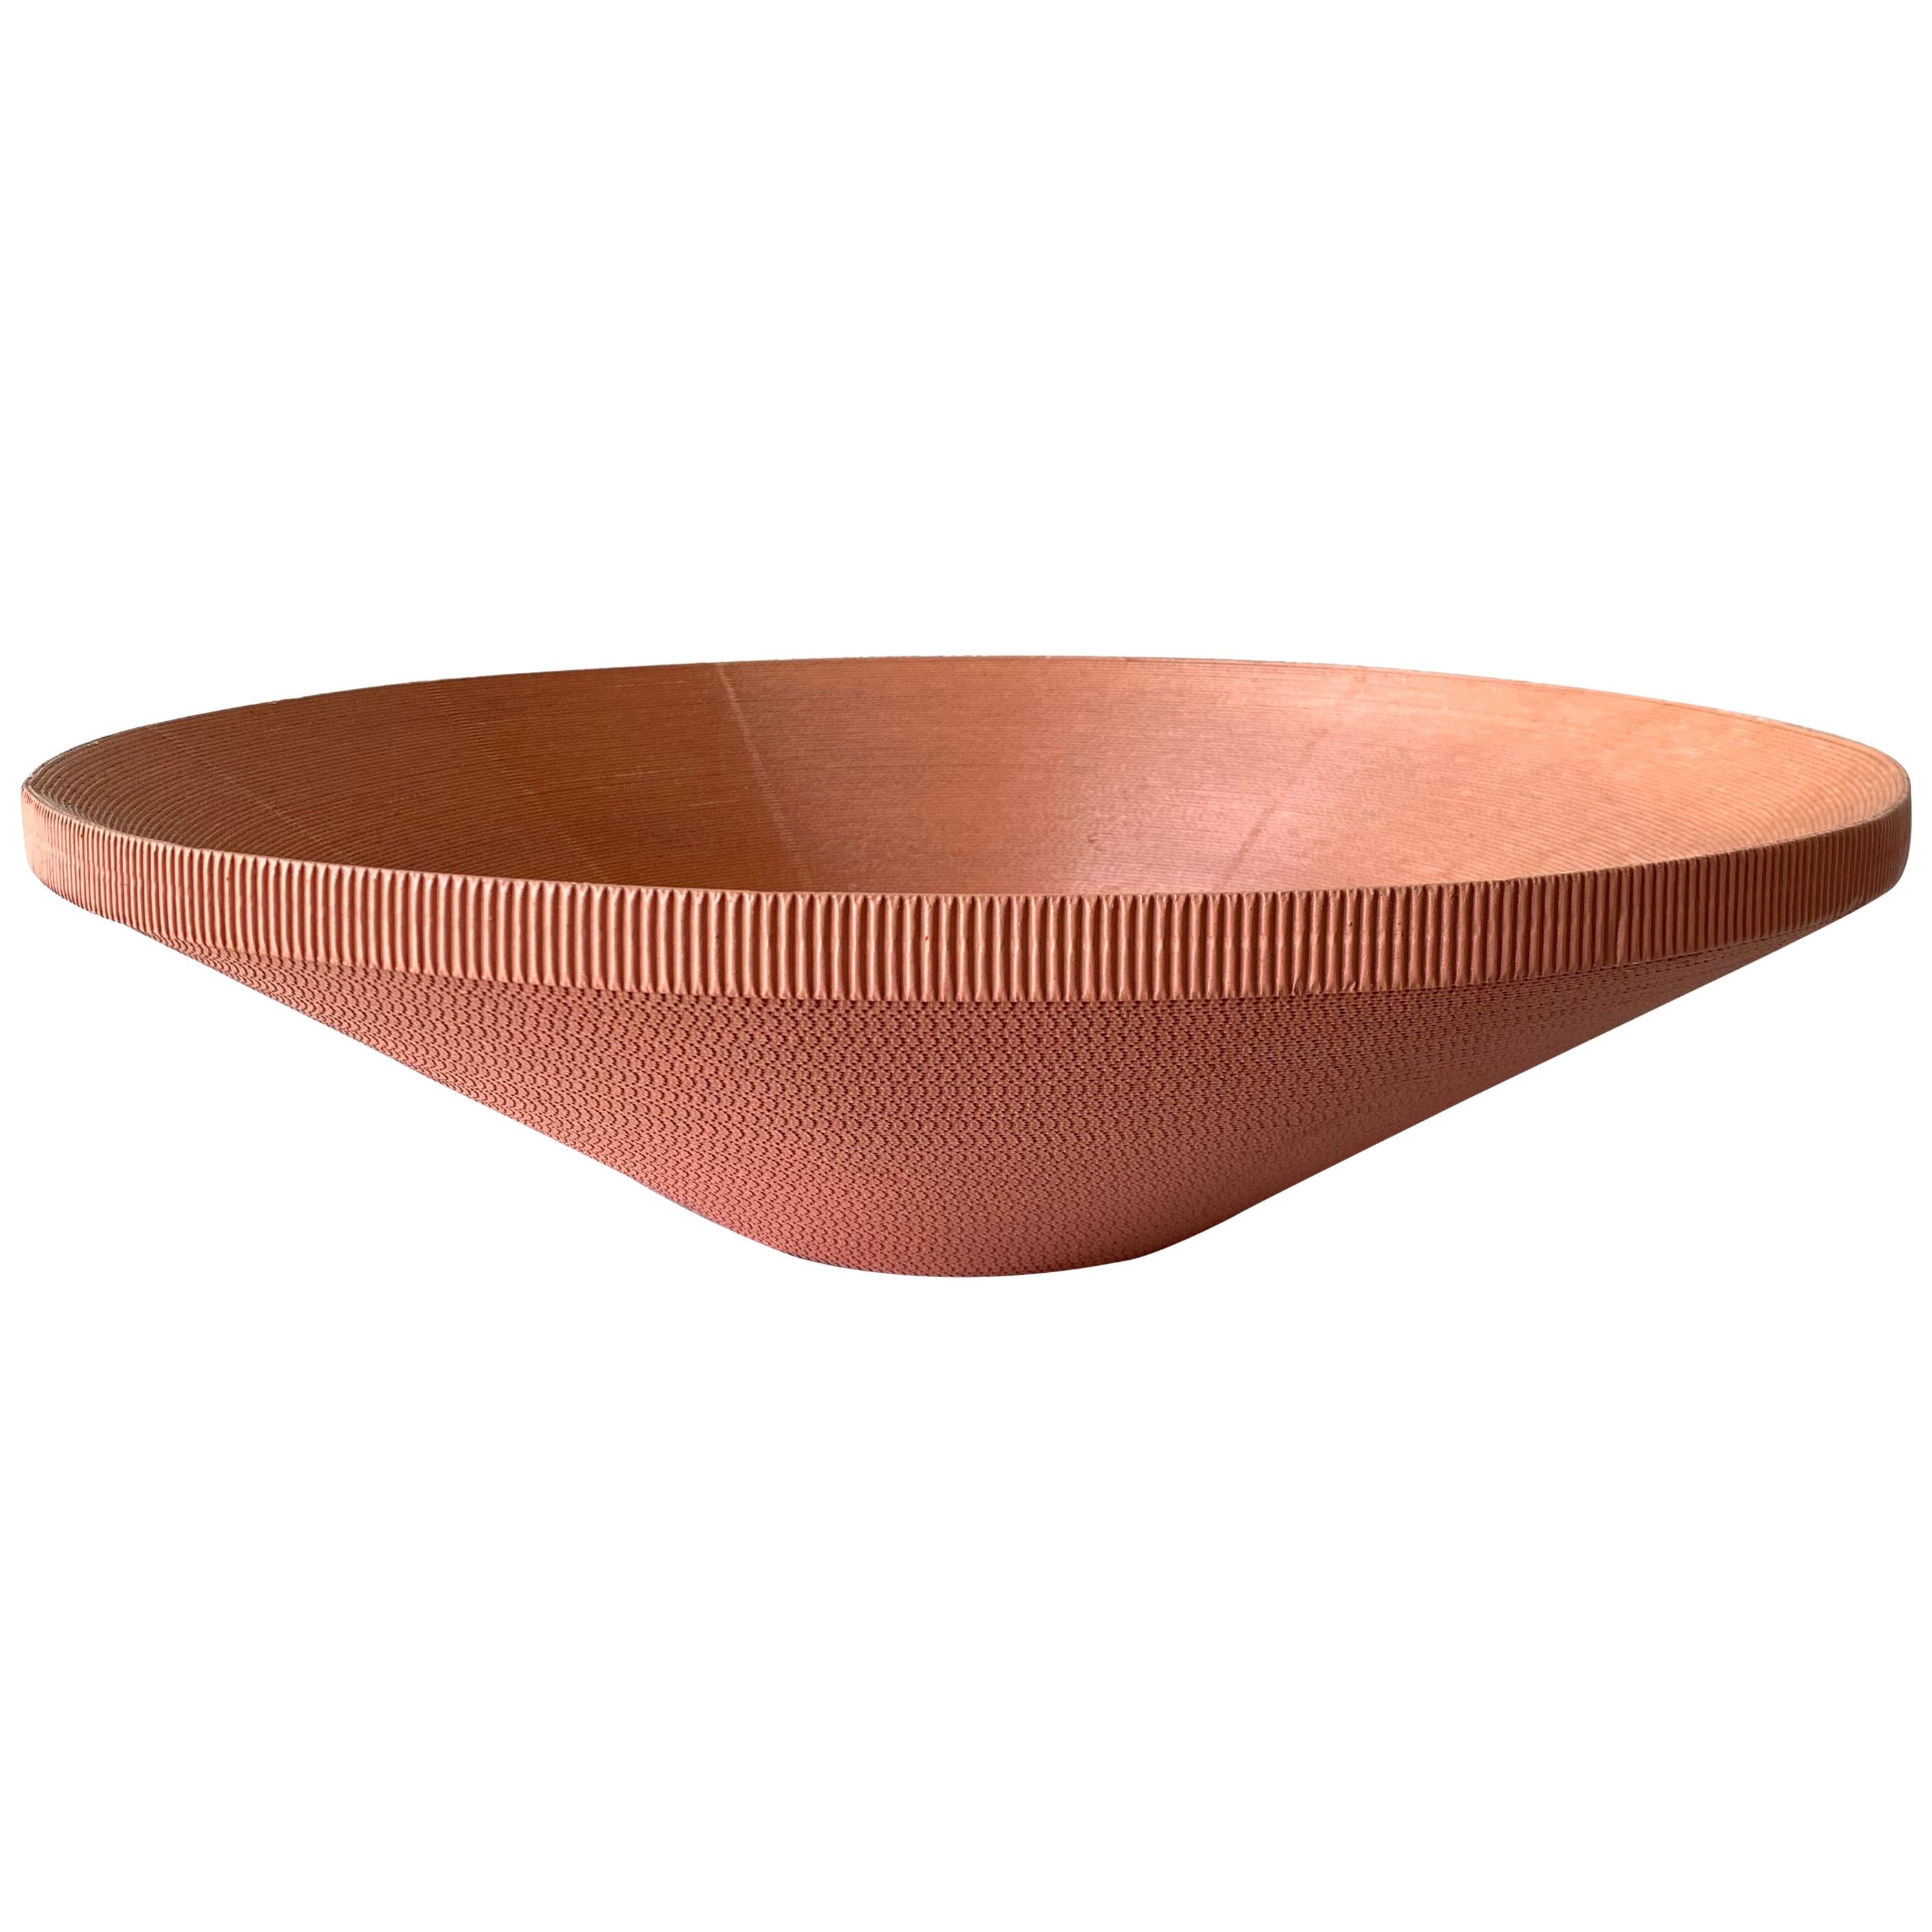 Postmodern Corrugated Cardboard Bowl or Vessel